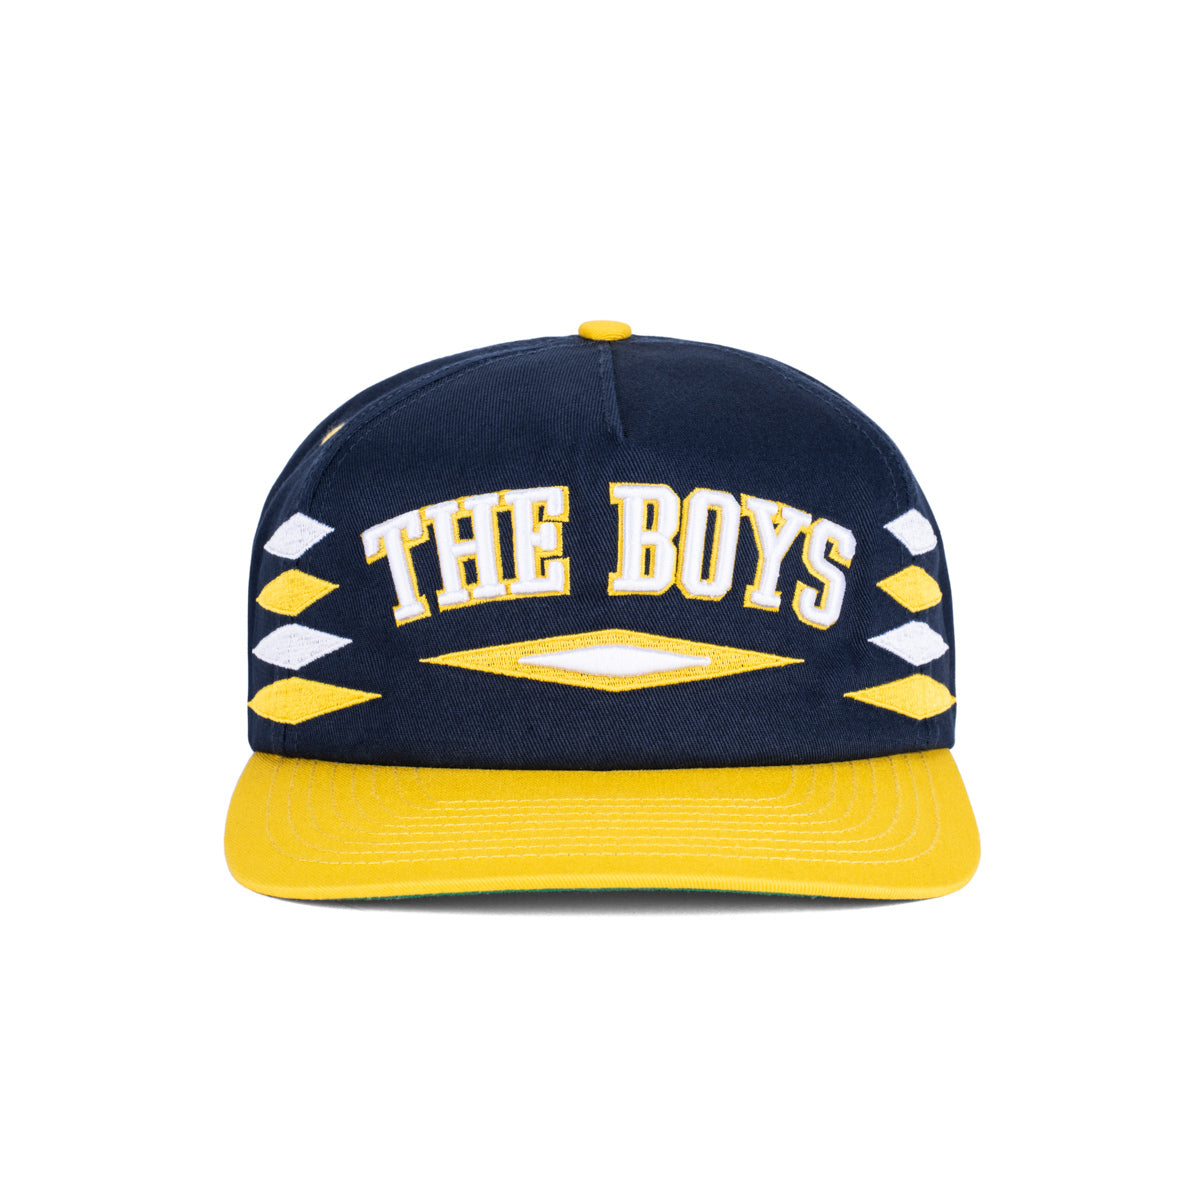 The Boys Diamond Retro Hat-Hats-Bussin With The Boys-Navy/Yellow-OS-Barstool Sports